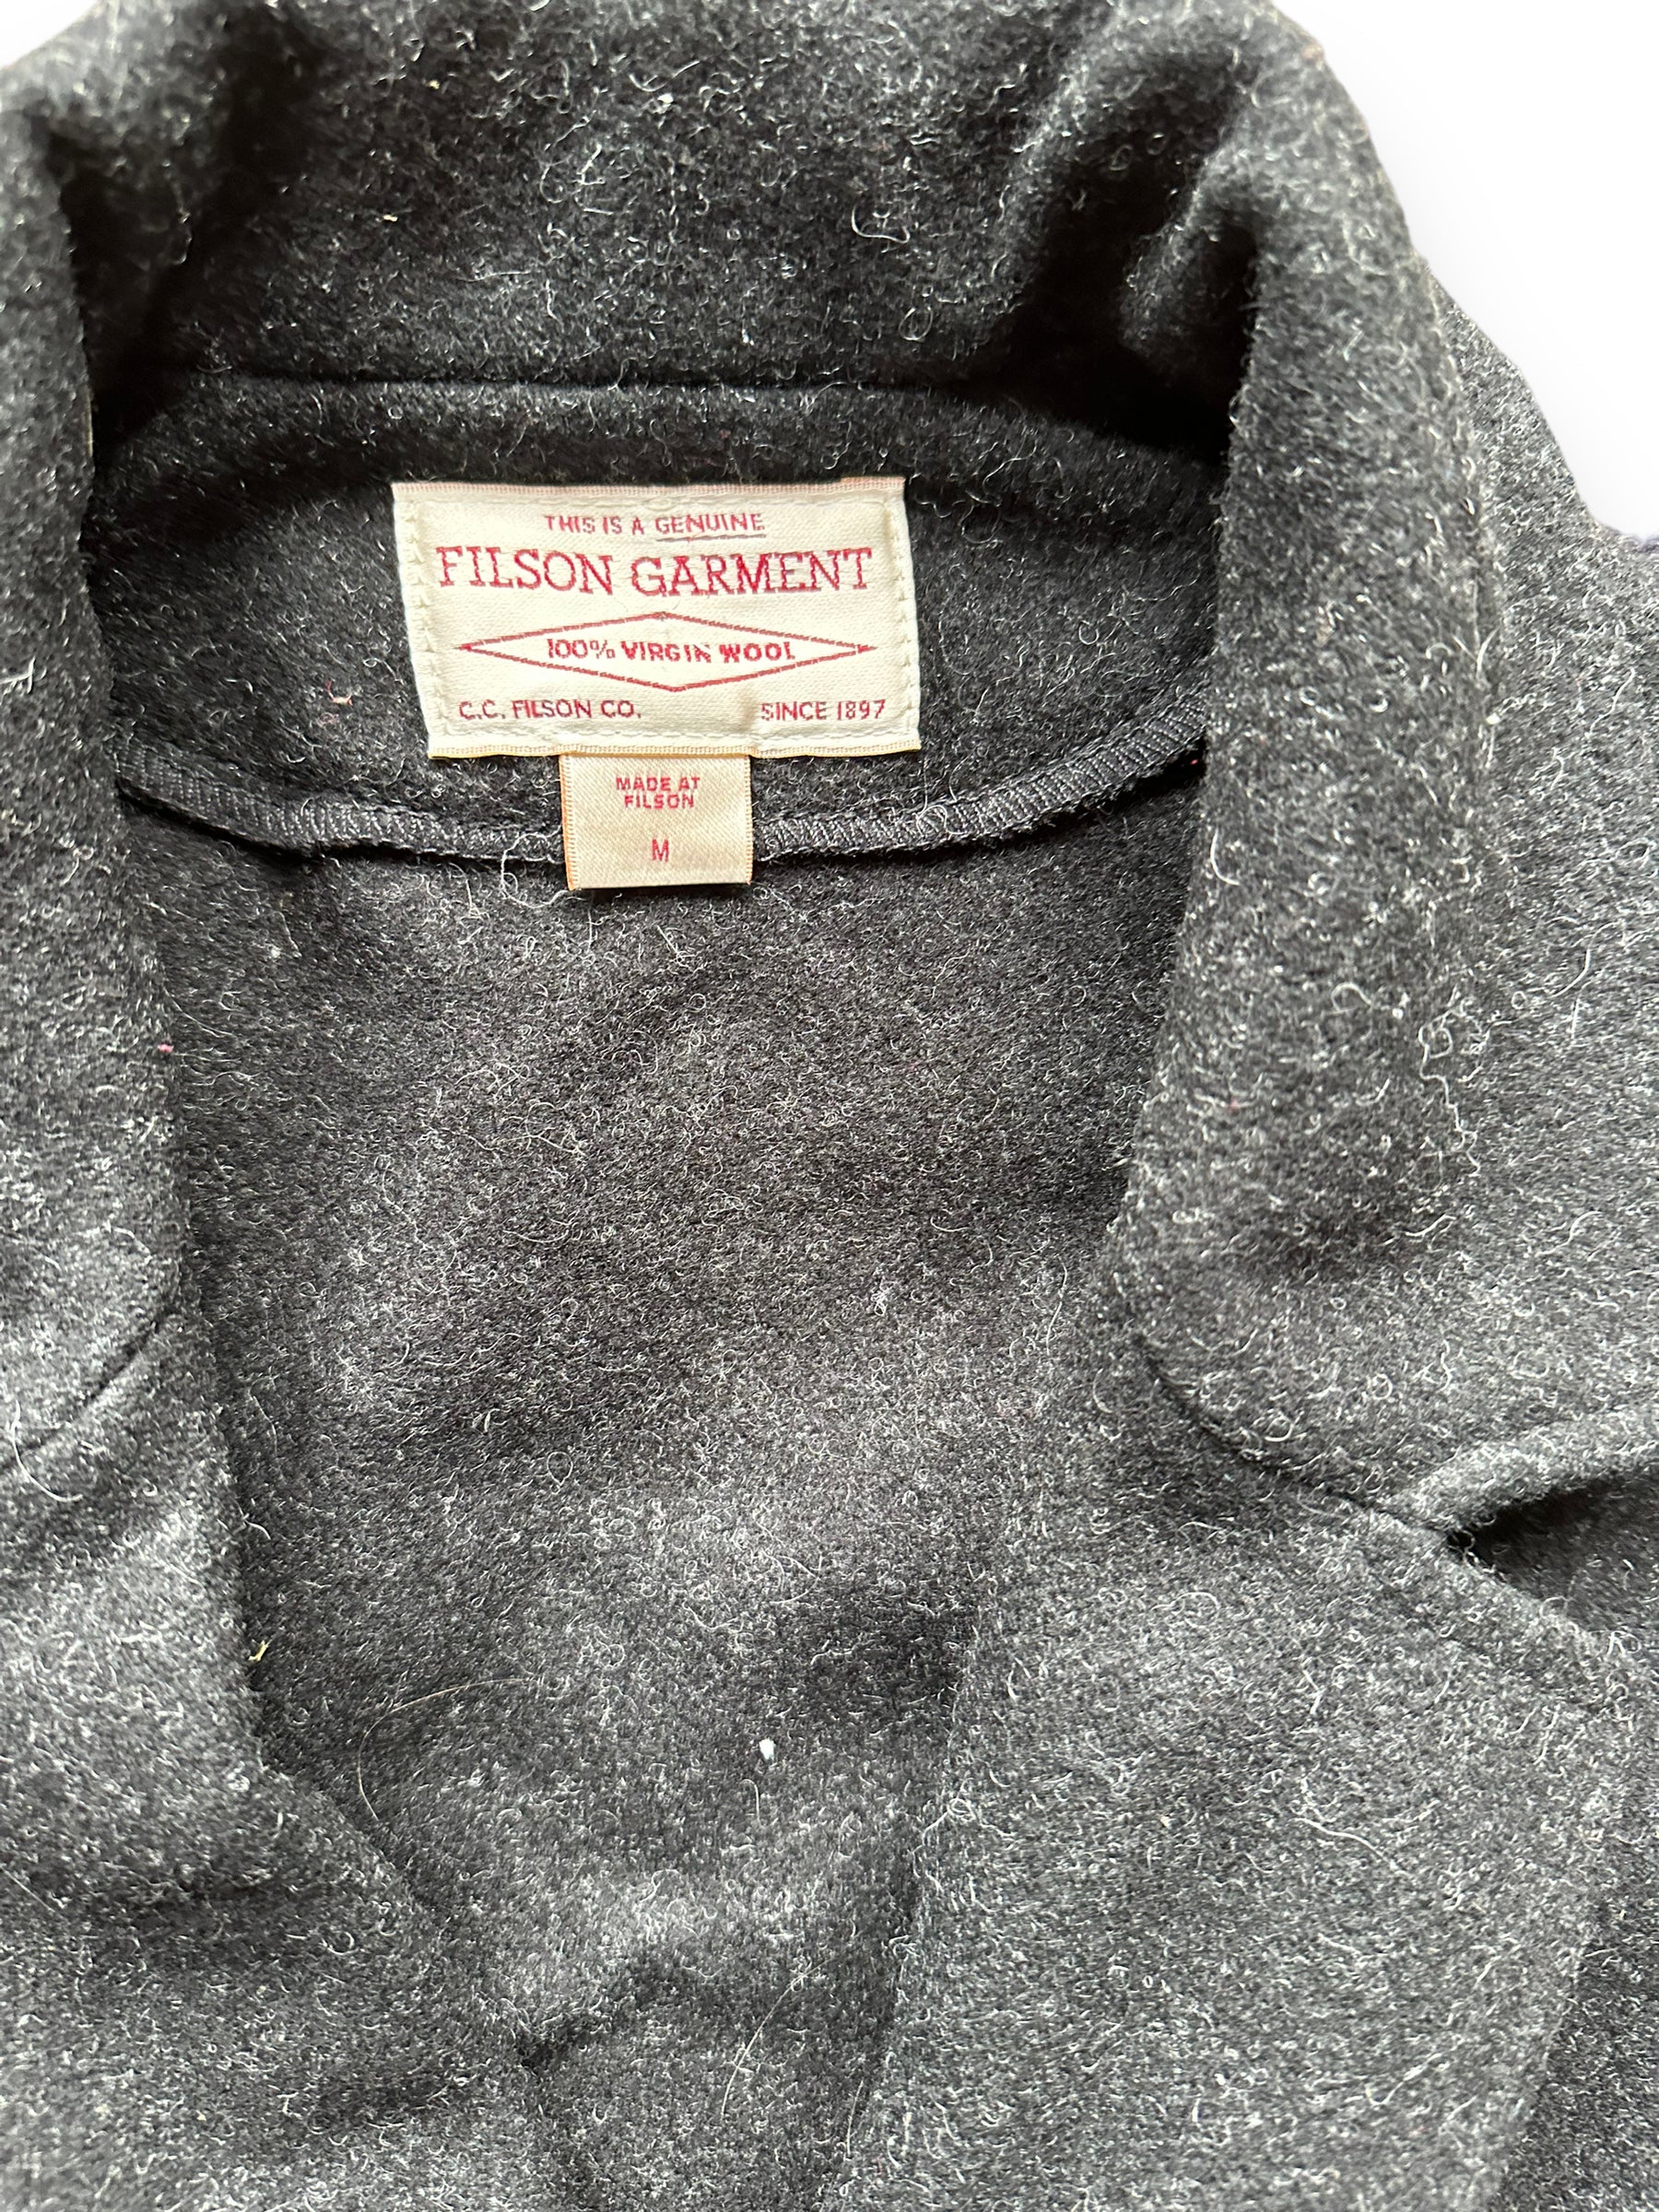 Tag View of Filson Western Style Charcoal Mackinaw Vest SZ M |  Barn Owl Vintage Goods | Vintage Filson Workwear Seattle